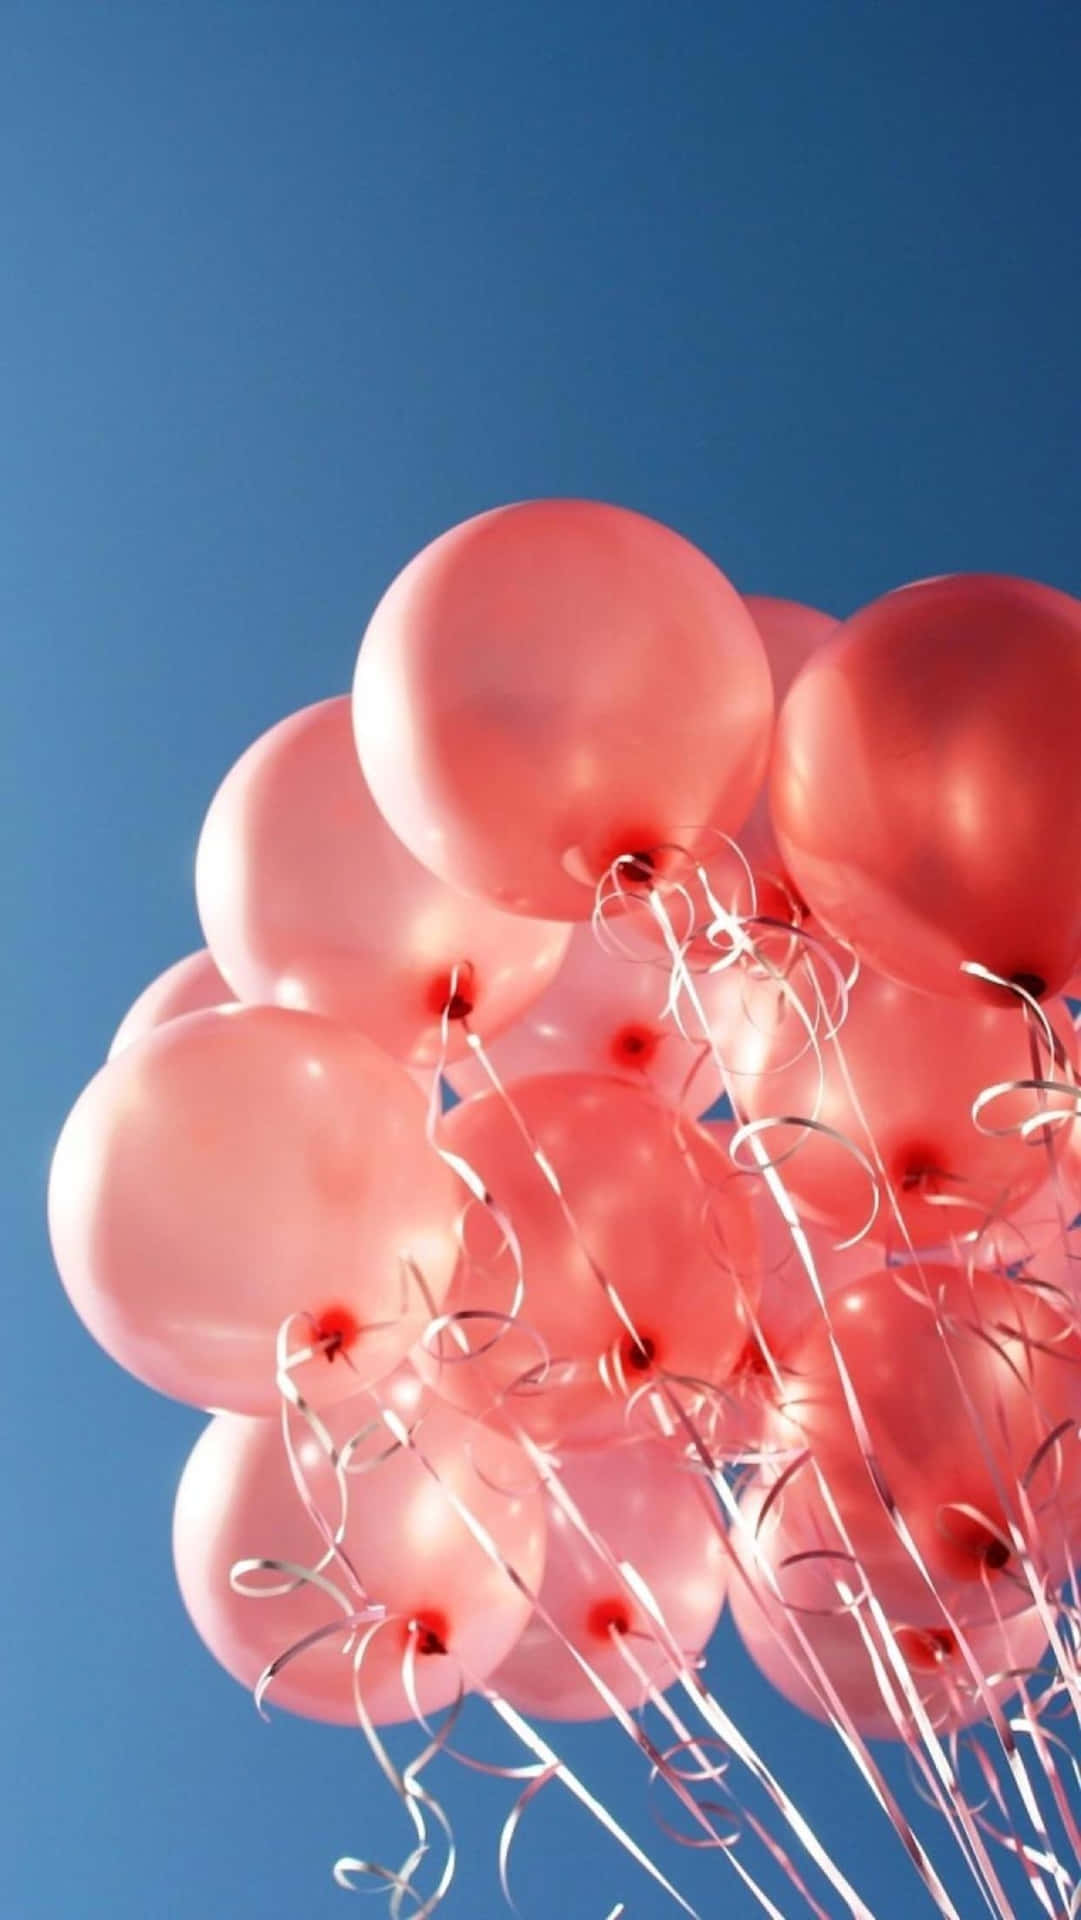 Geburtstagsballonsrosa Ballons Im Himmel Bild